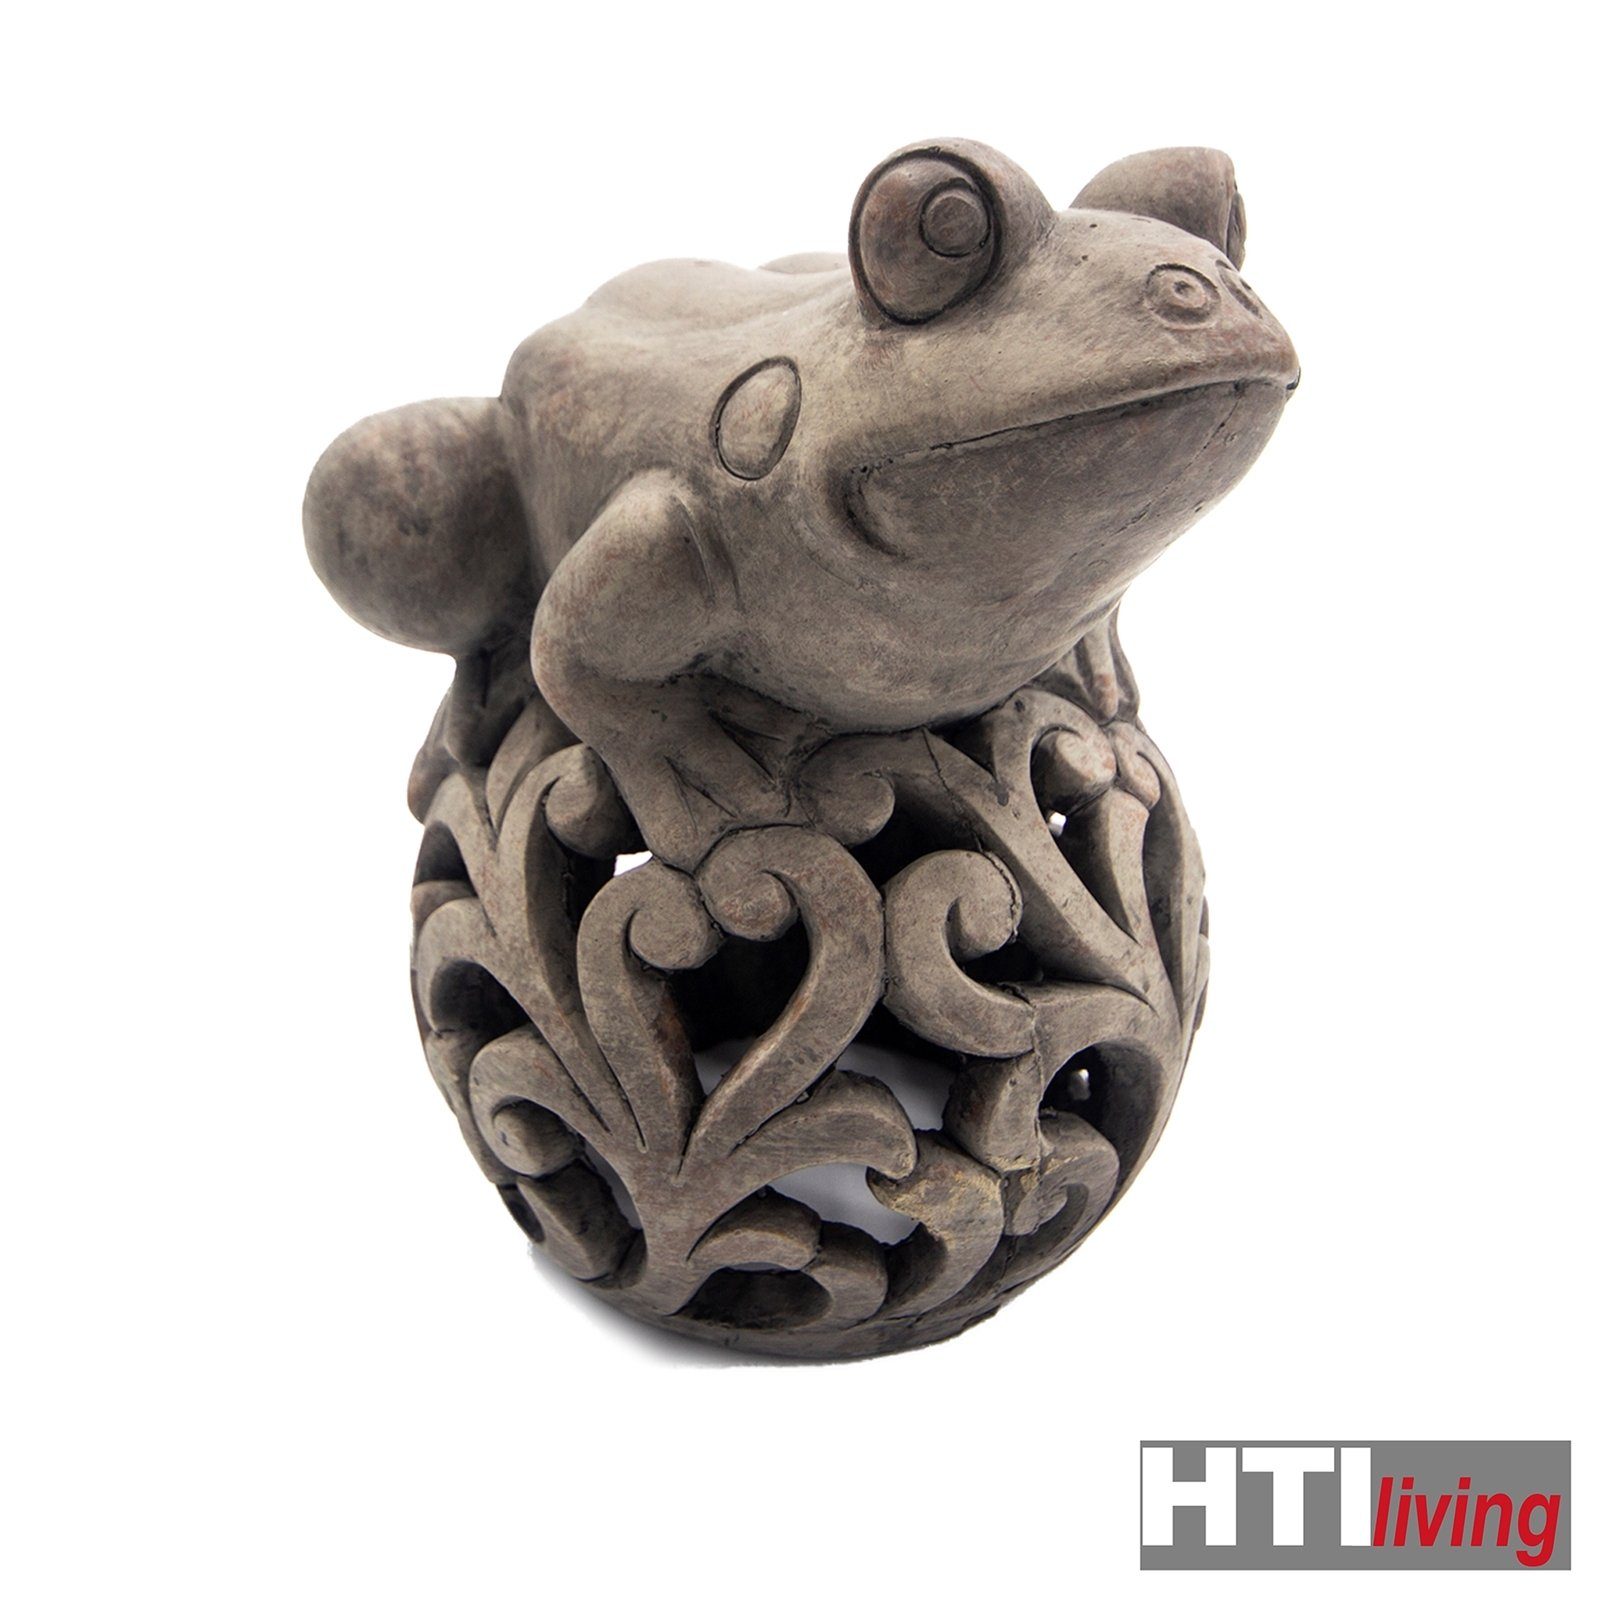 HTI-Living Gartenfigur Gartenfigur Frosch auf Zementfigur Froschfigur Märchenfigur Kugel